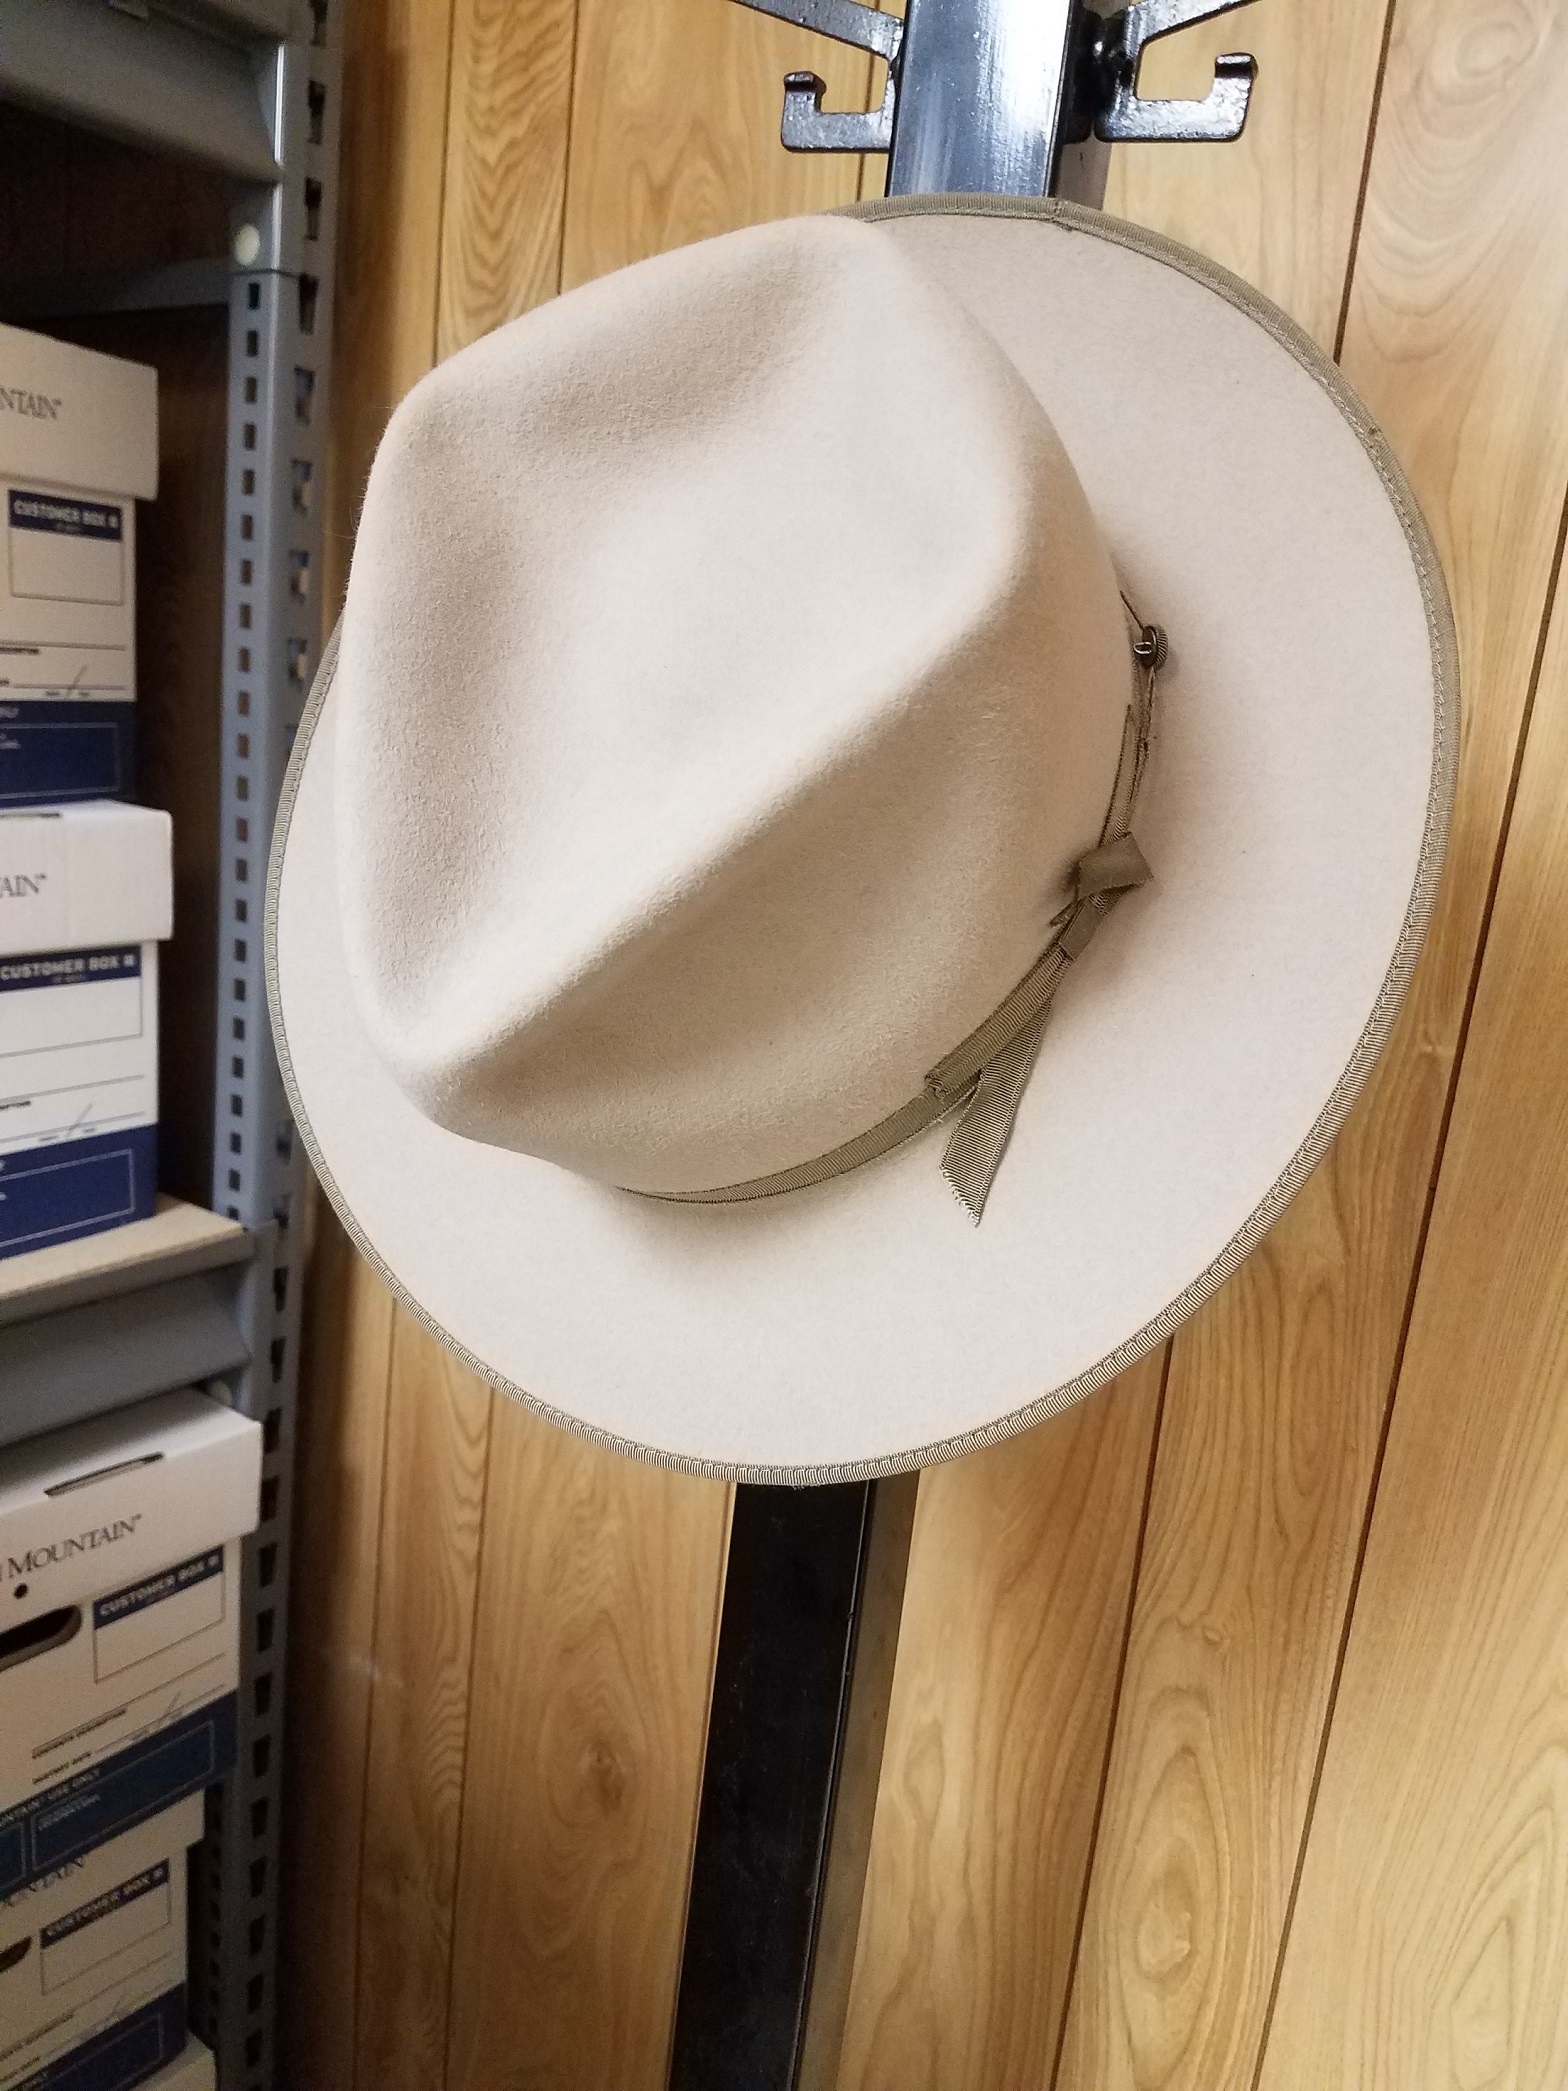 Rm williams hat by akubra